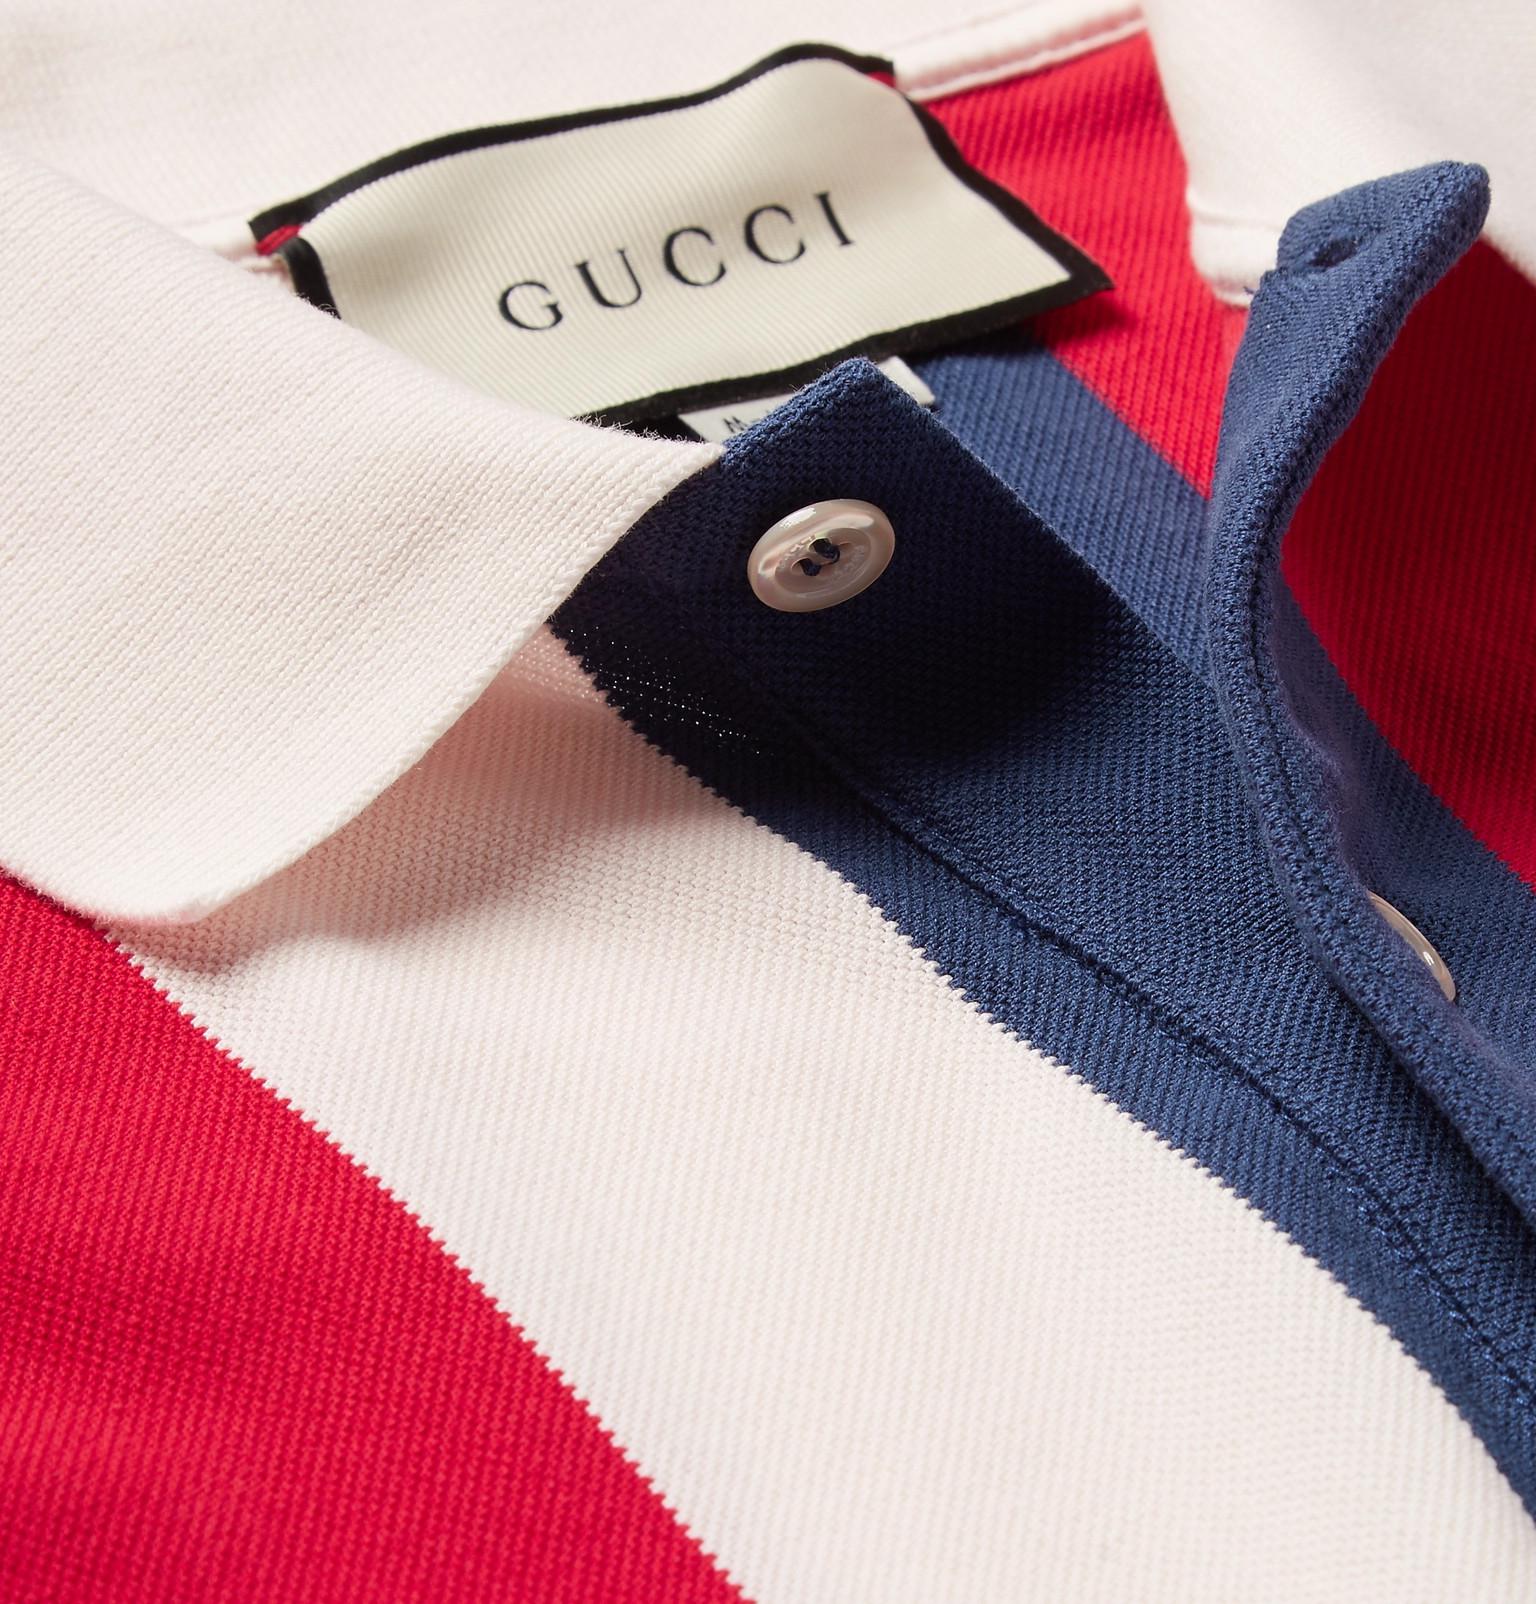 Gucci Cotton Logo Baiadera Polo in Red for Men - Lyst